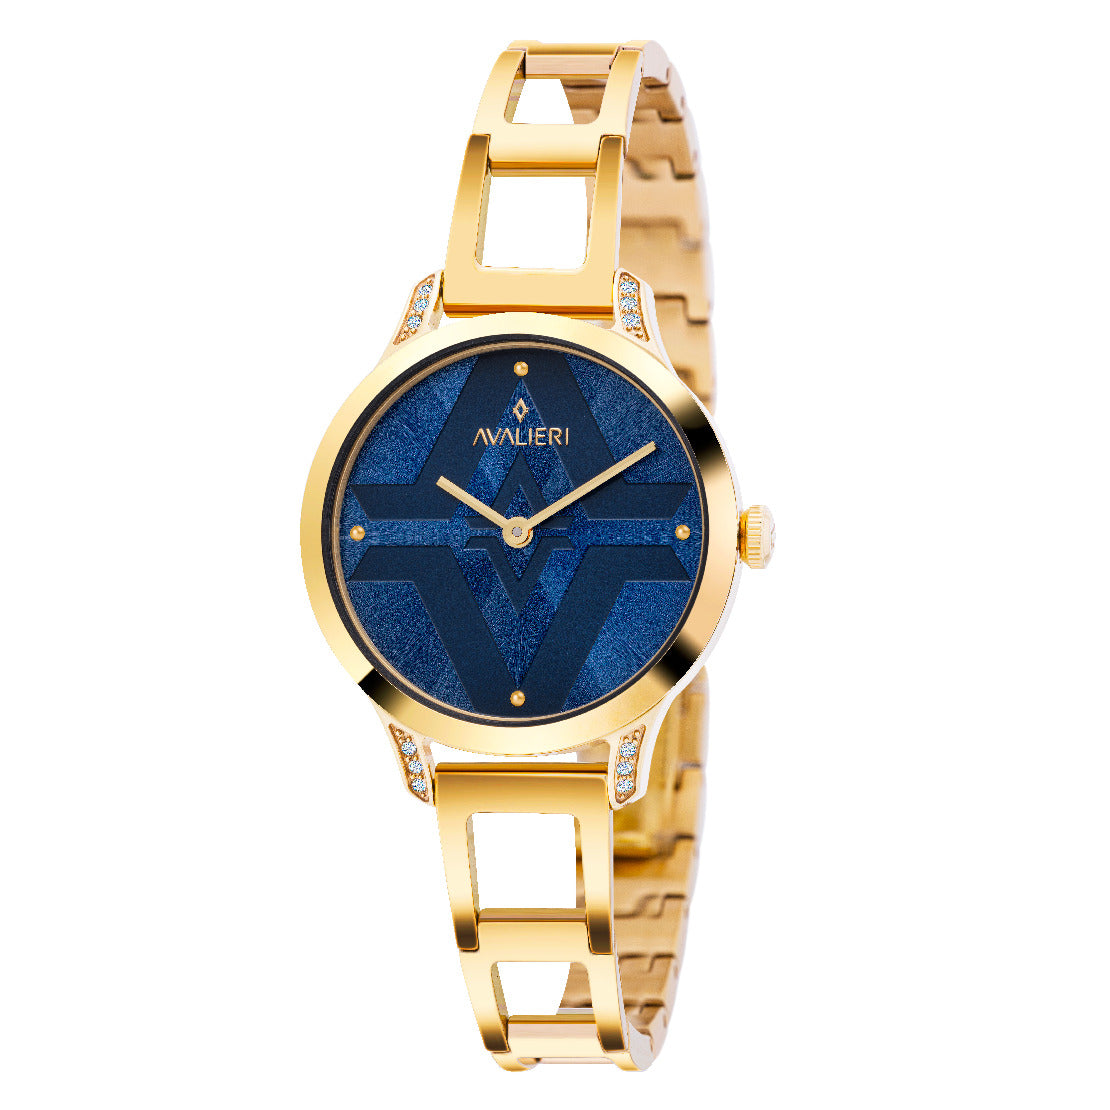 Avalieri Women's Quartz Blue Dial Watch - AV-2505B